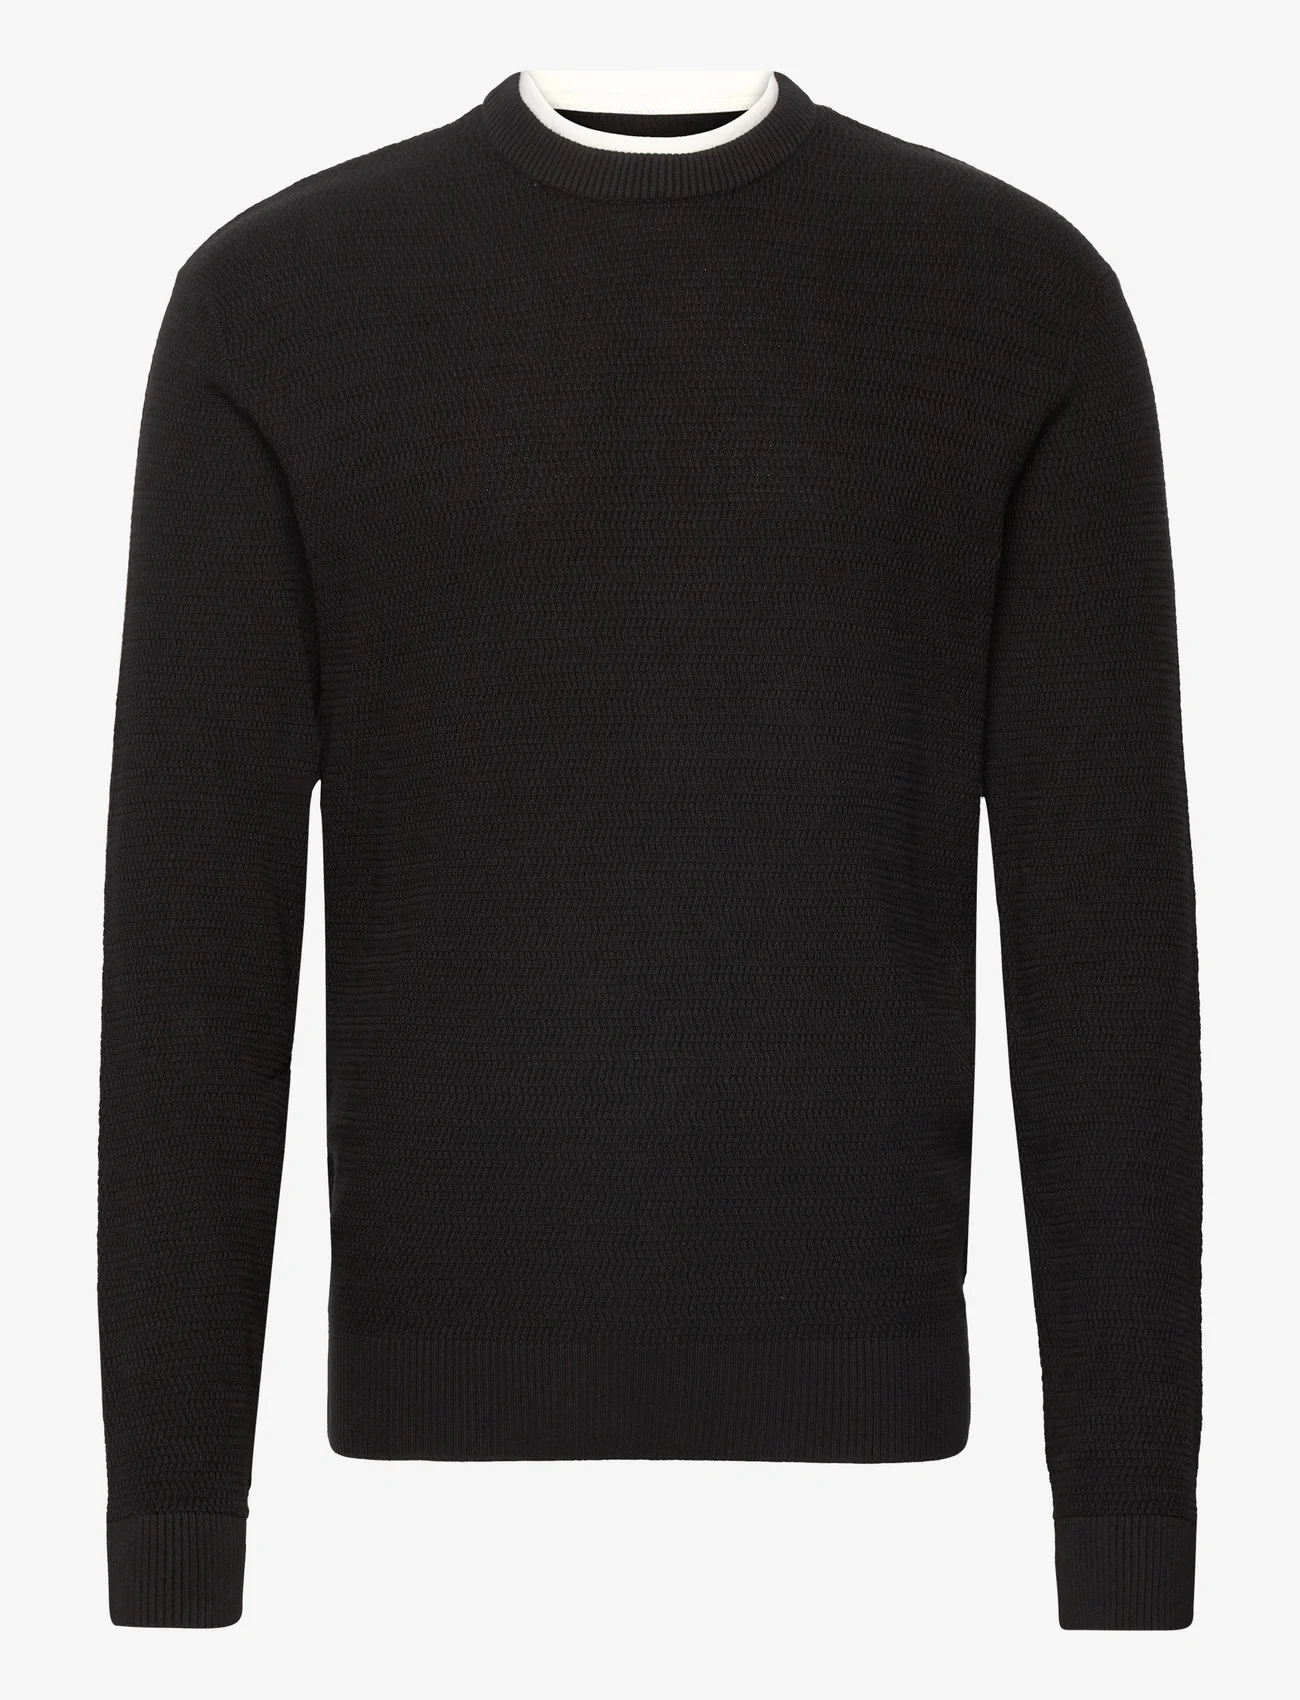 Tom Tailor - structured doublelayer knit - rundhals - black - 0